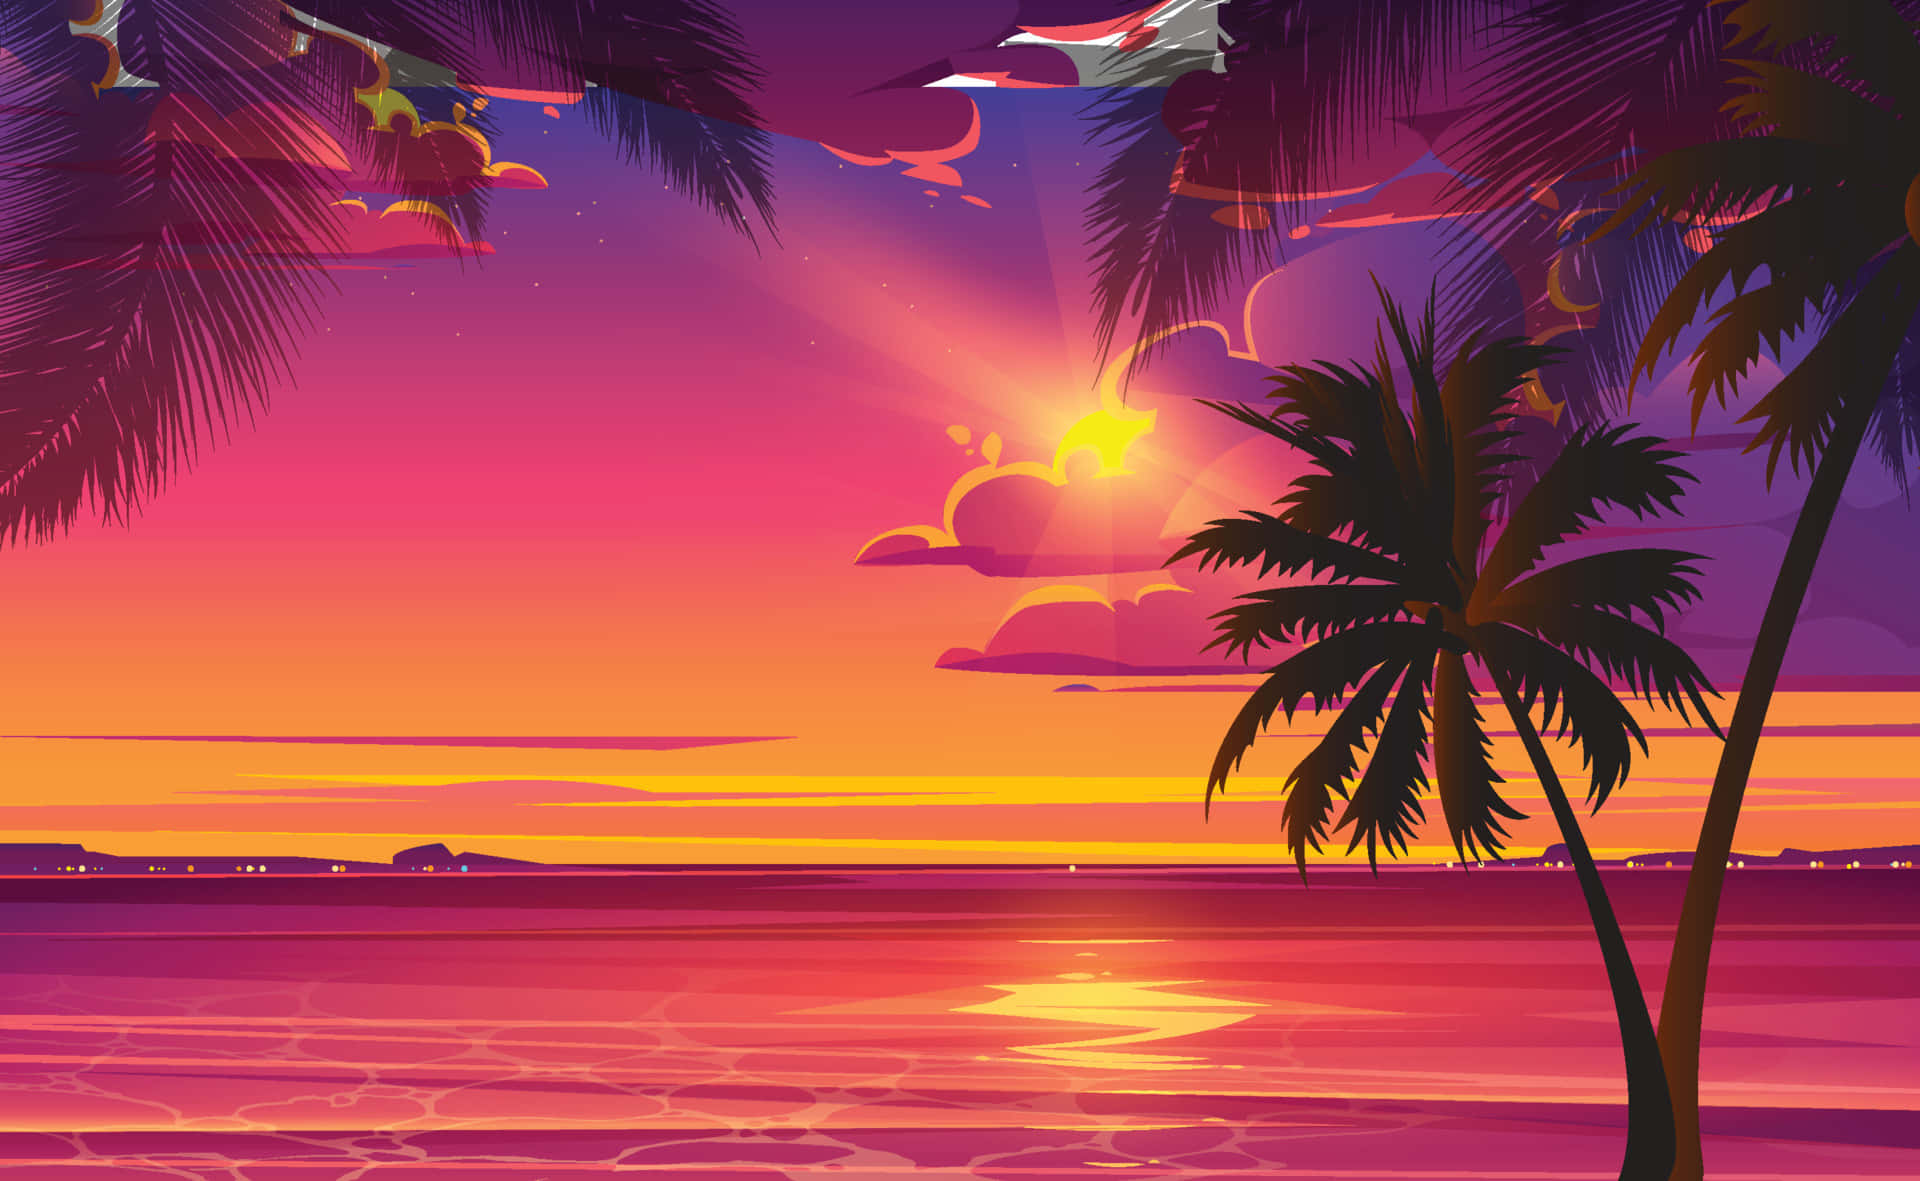 "A beautiful beach sunset"